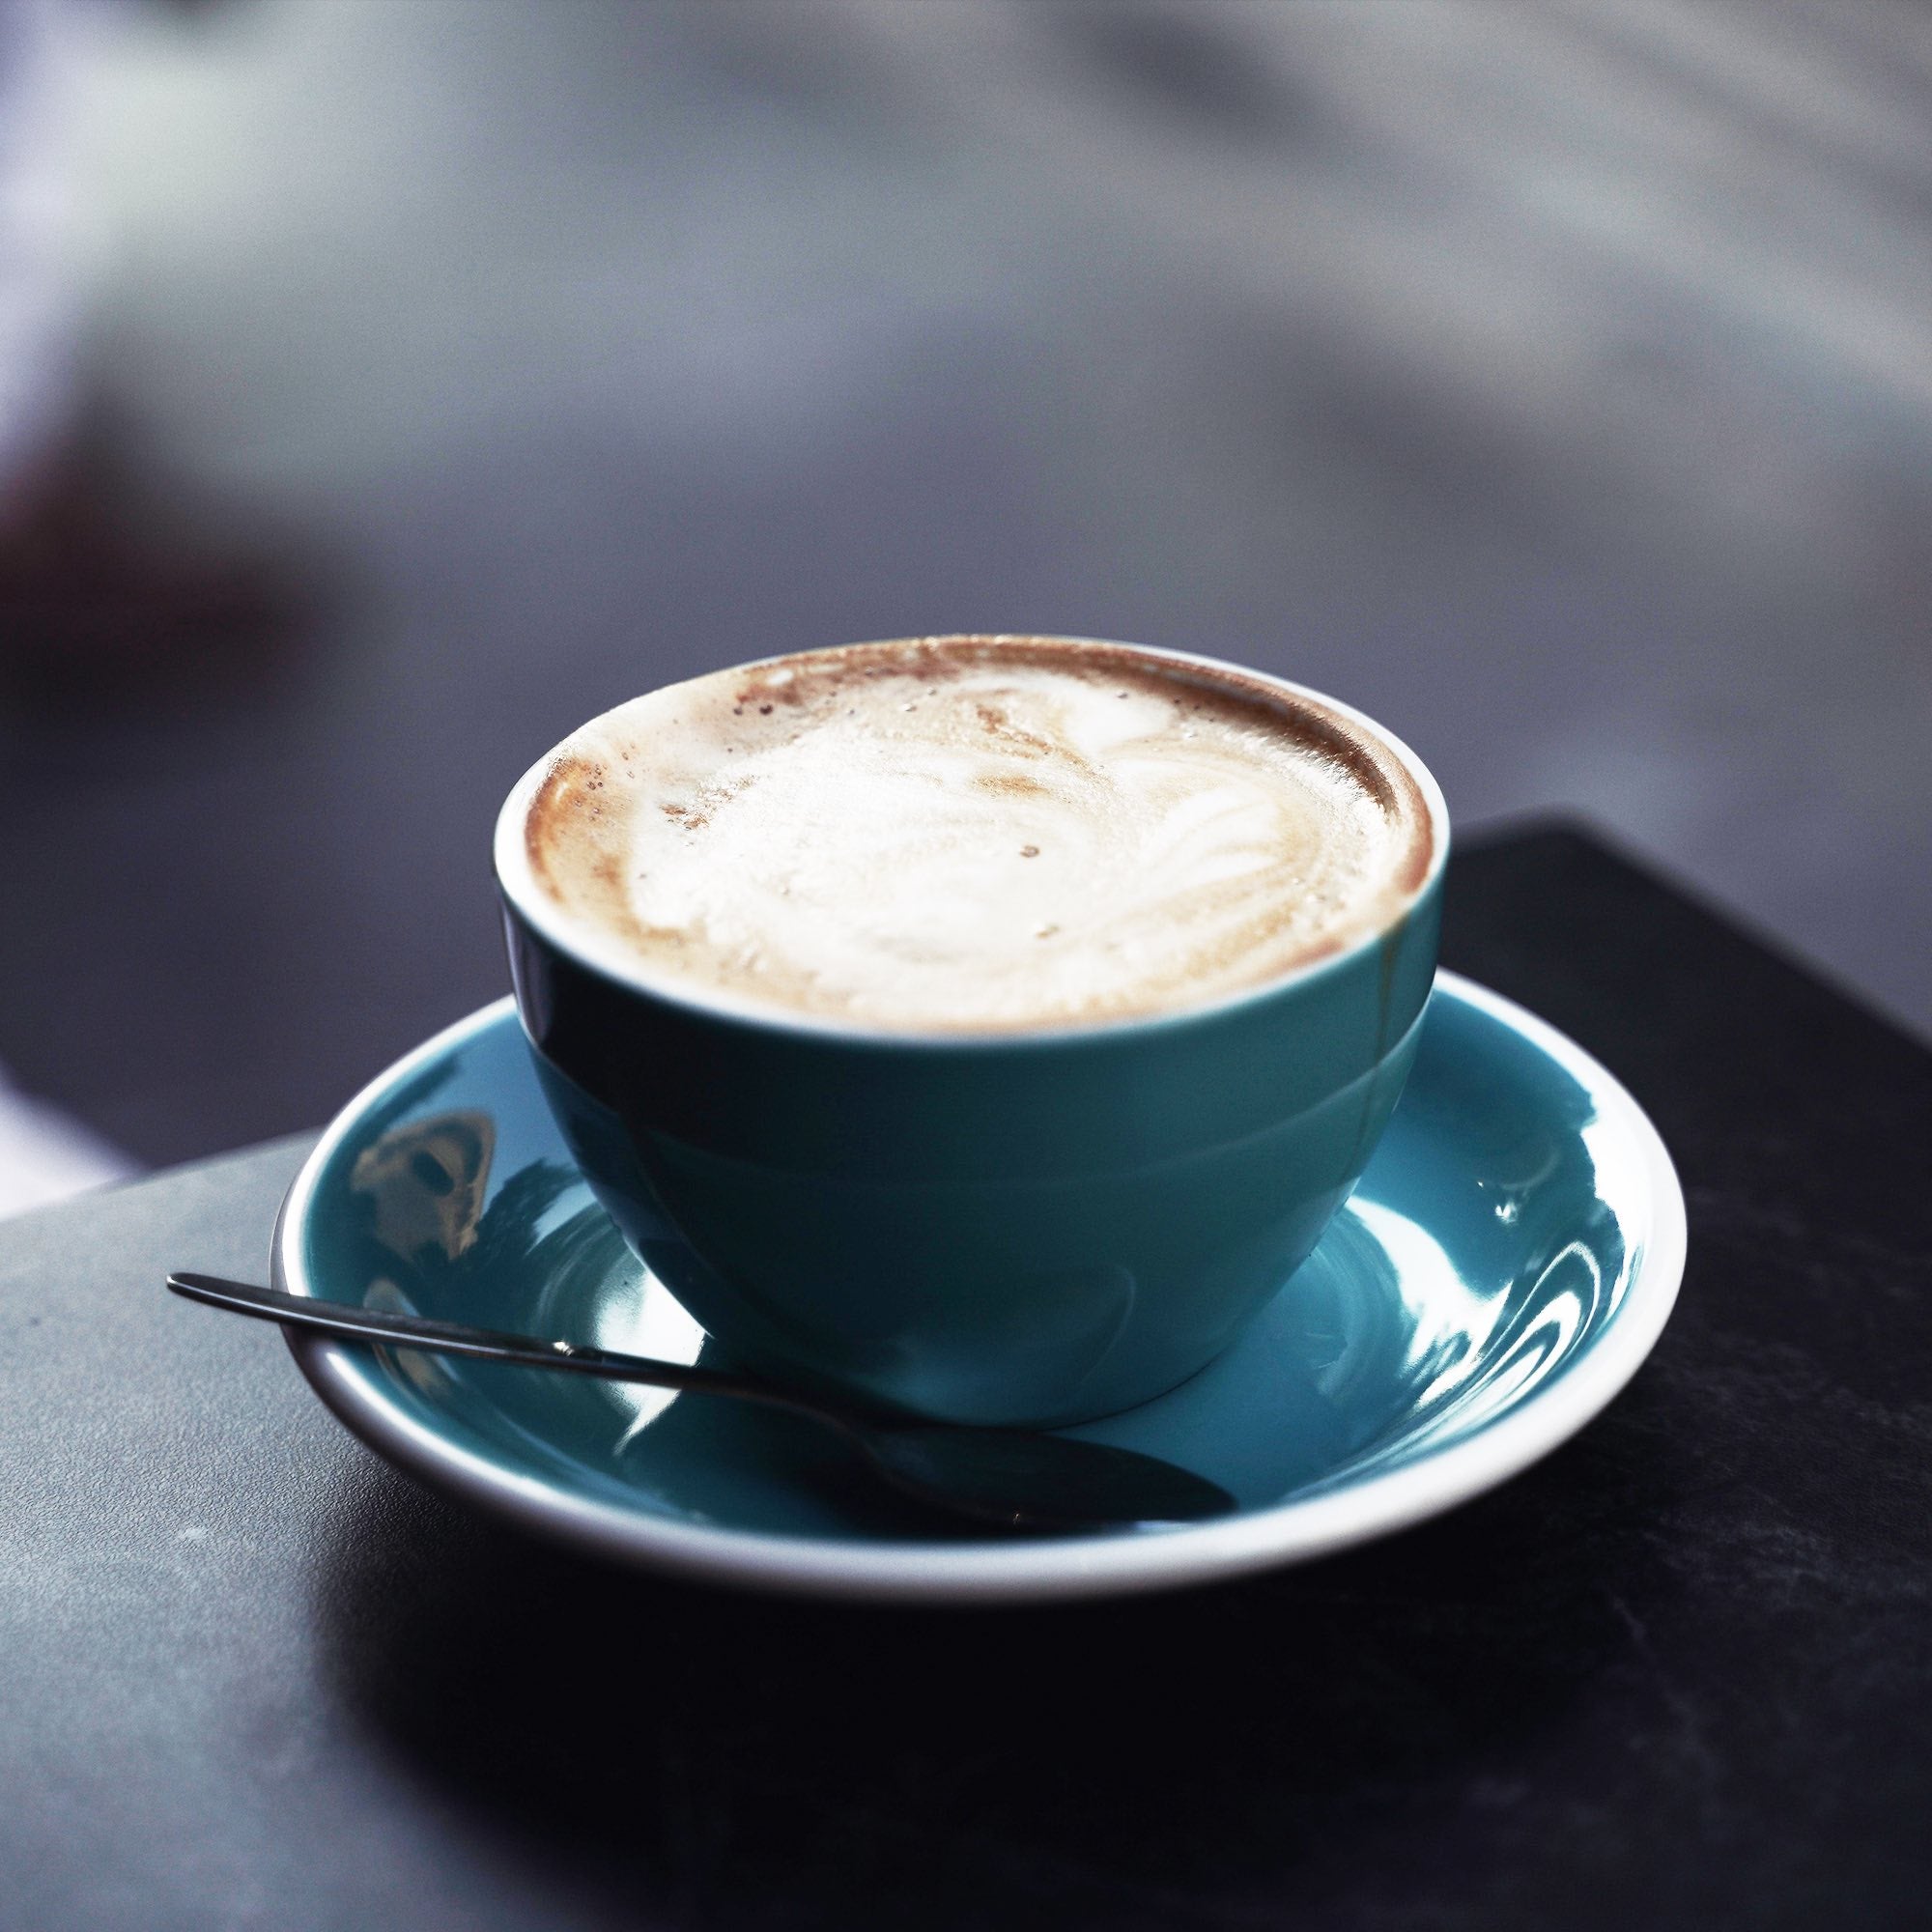 A coffee mug on the edge of a black countertop.